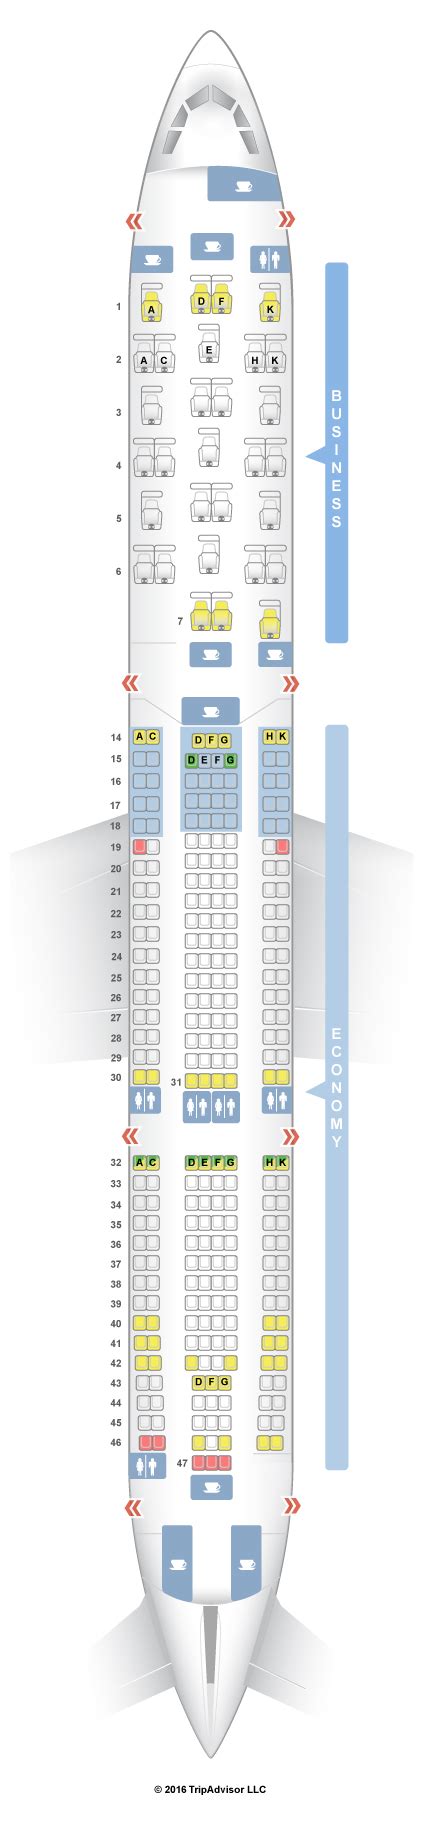 Seatguru Seat Map Brussels Airlines Airbus A330 300 333